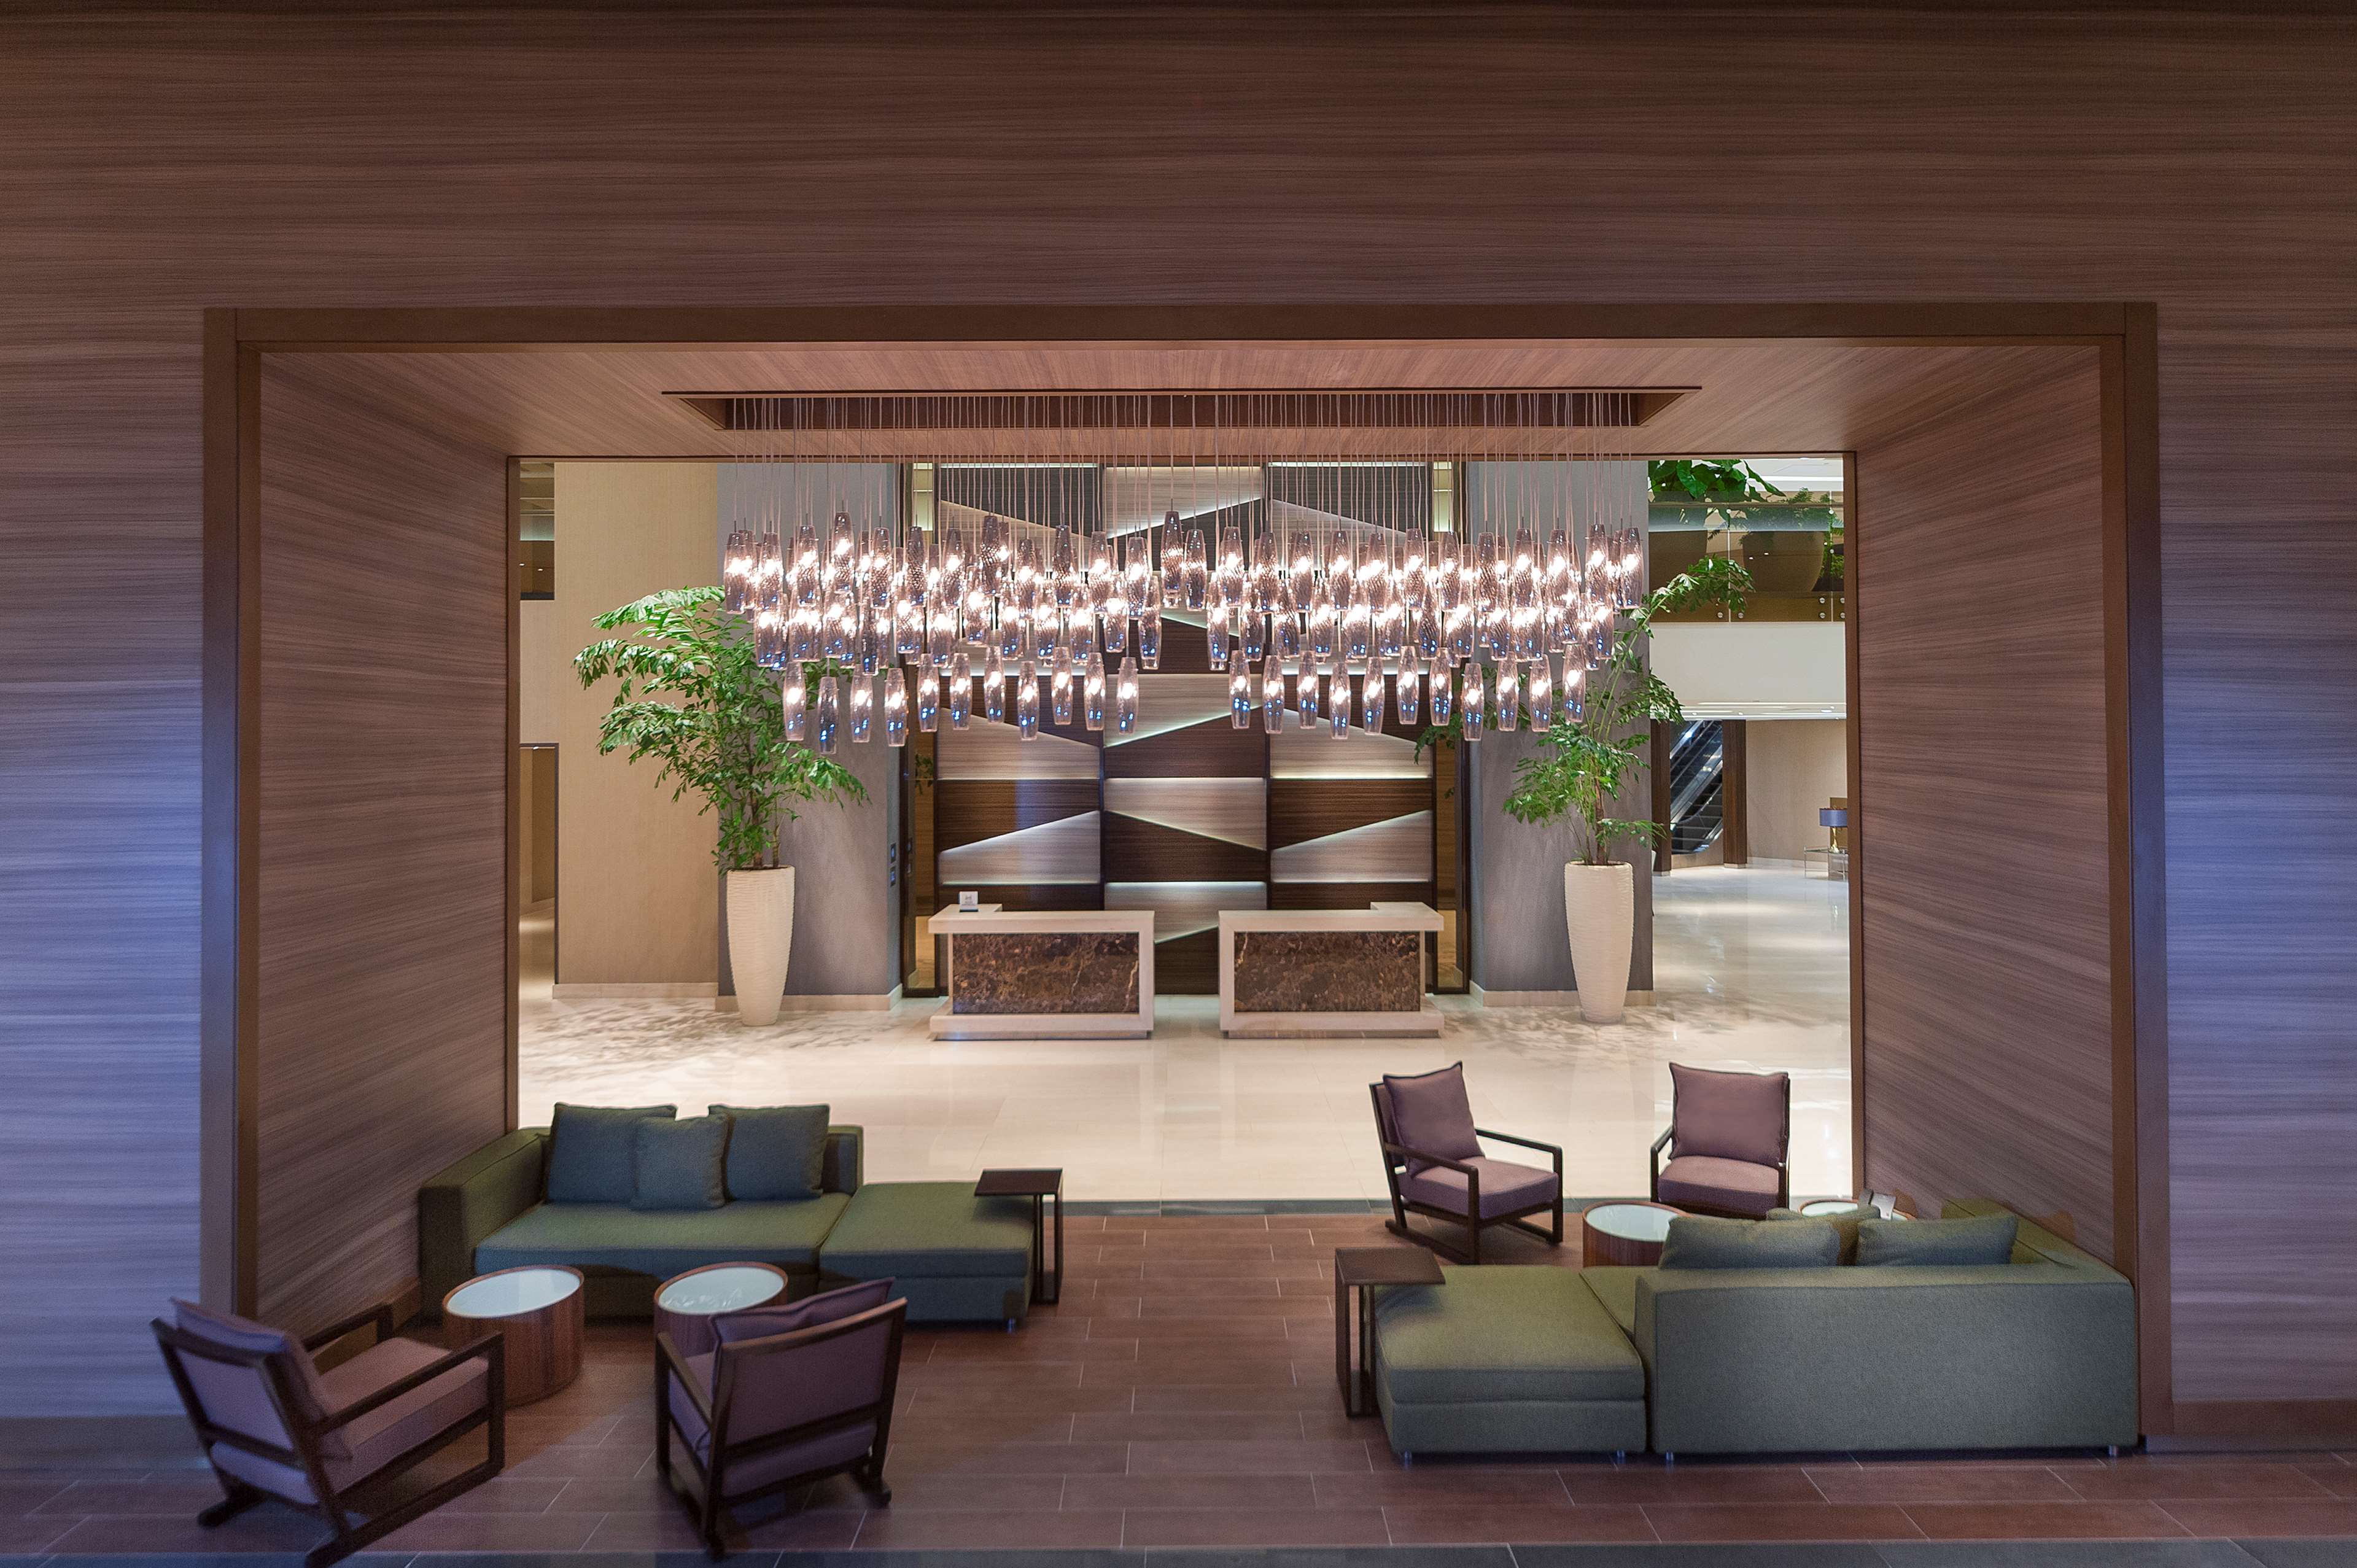 Embassy Suites by Hilton Santo Domingo